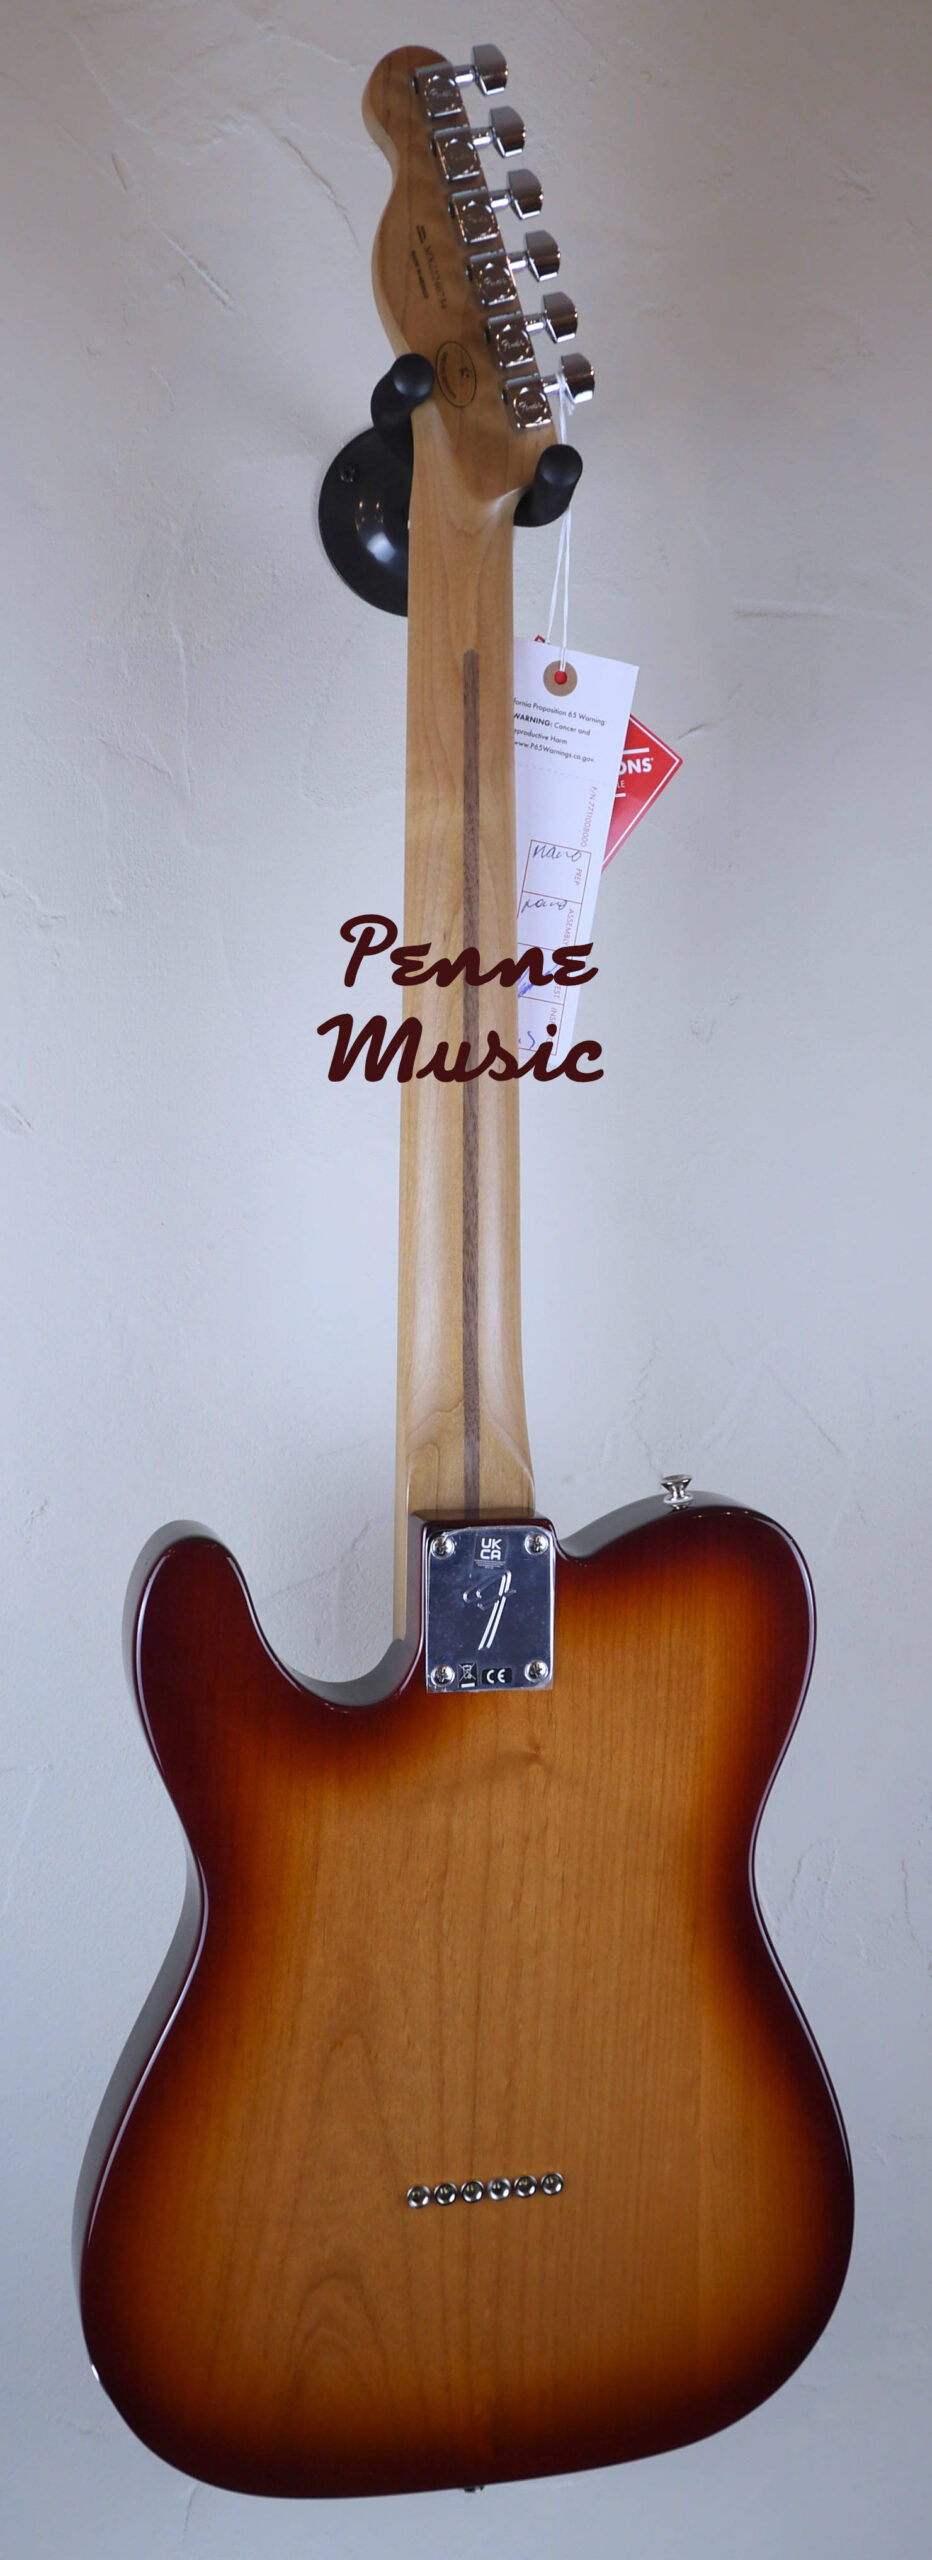 Fender Limited Edition Player Telecaster Roasted Maple Neck Sienna Sunburst 2